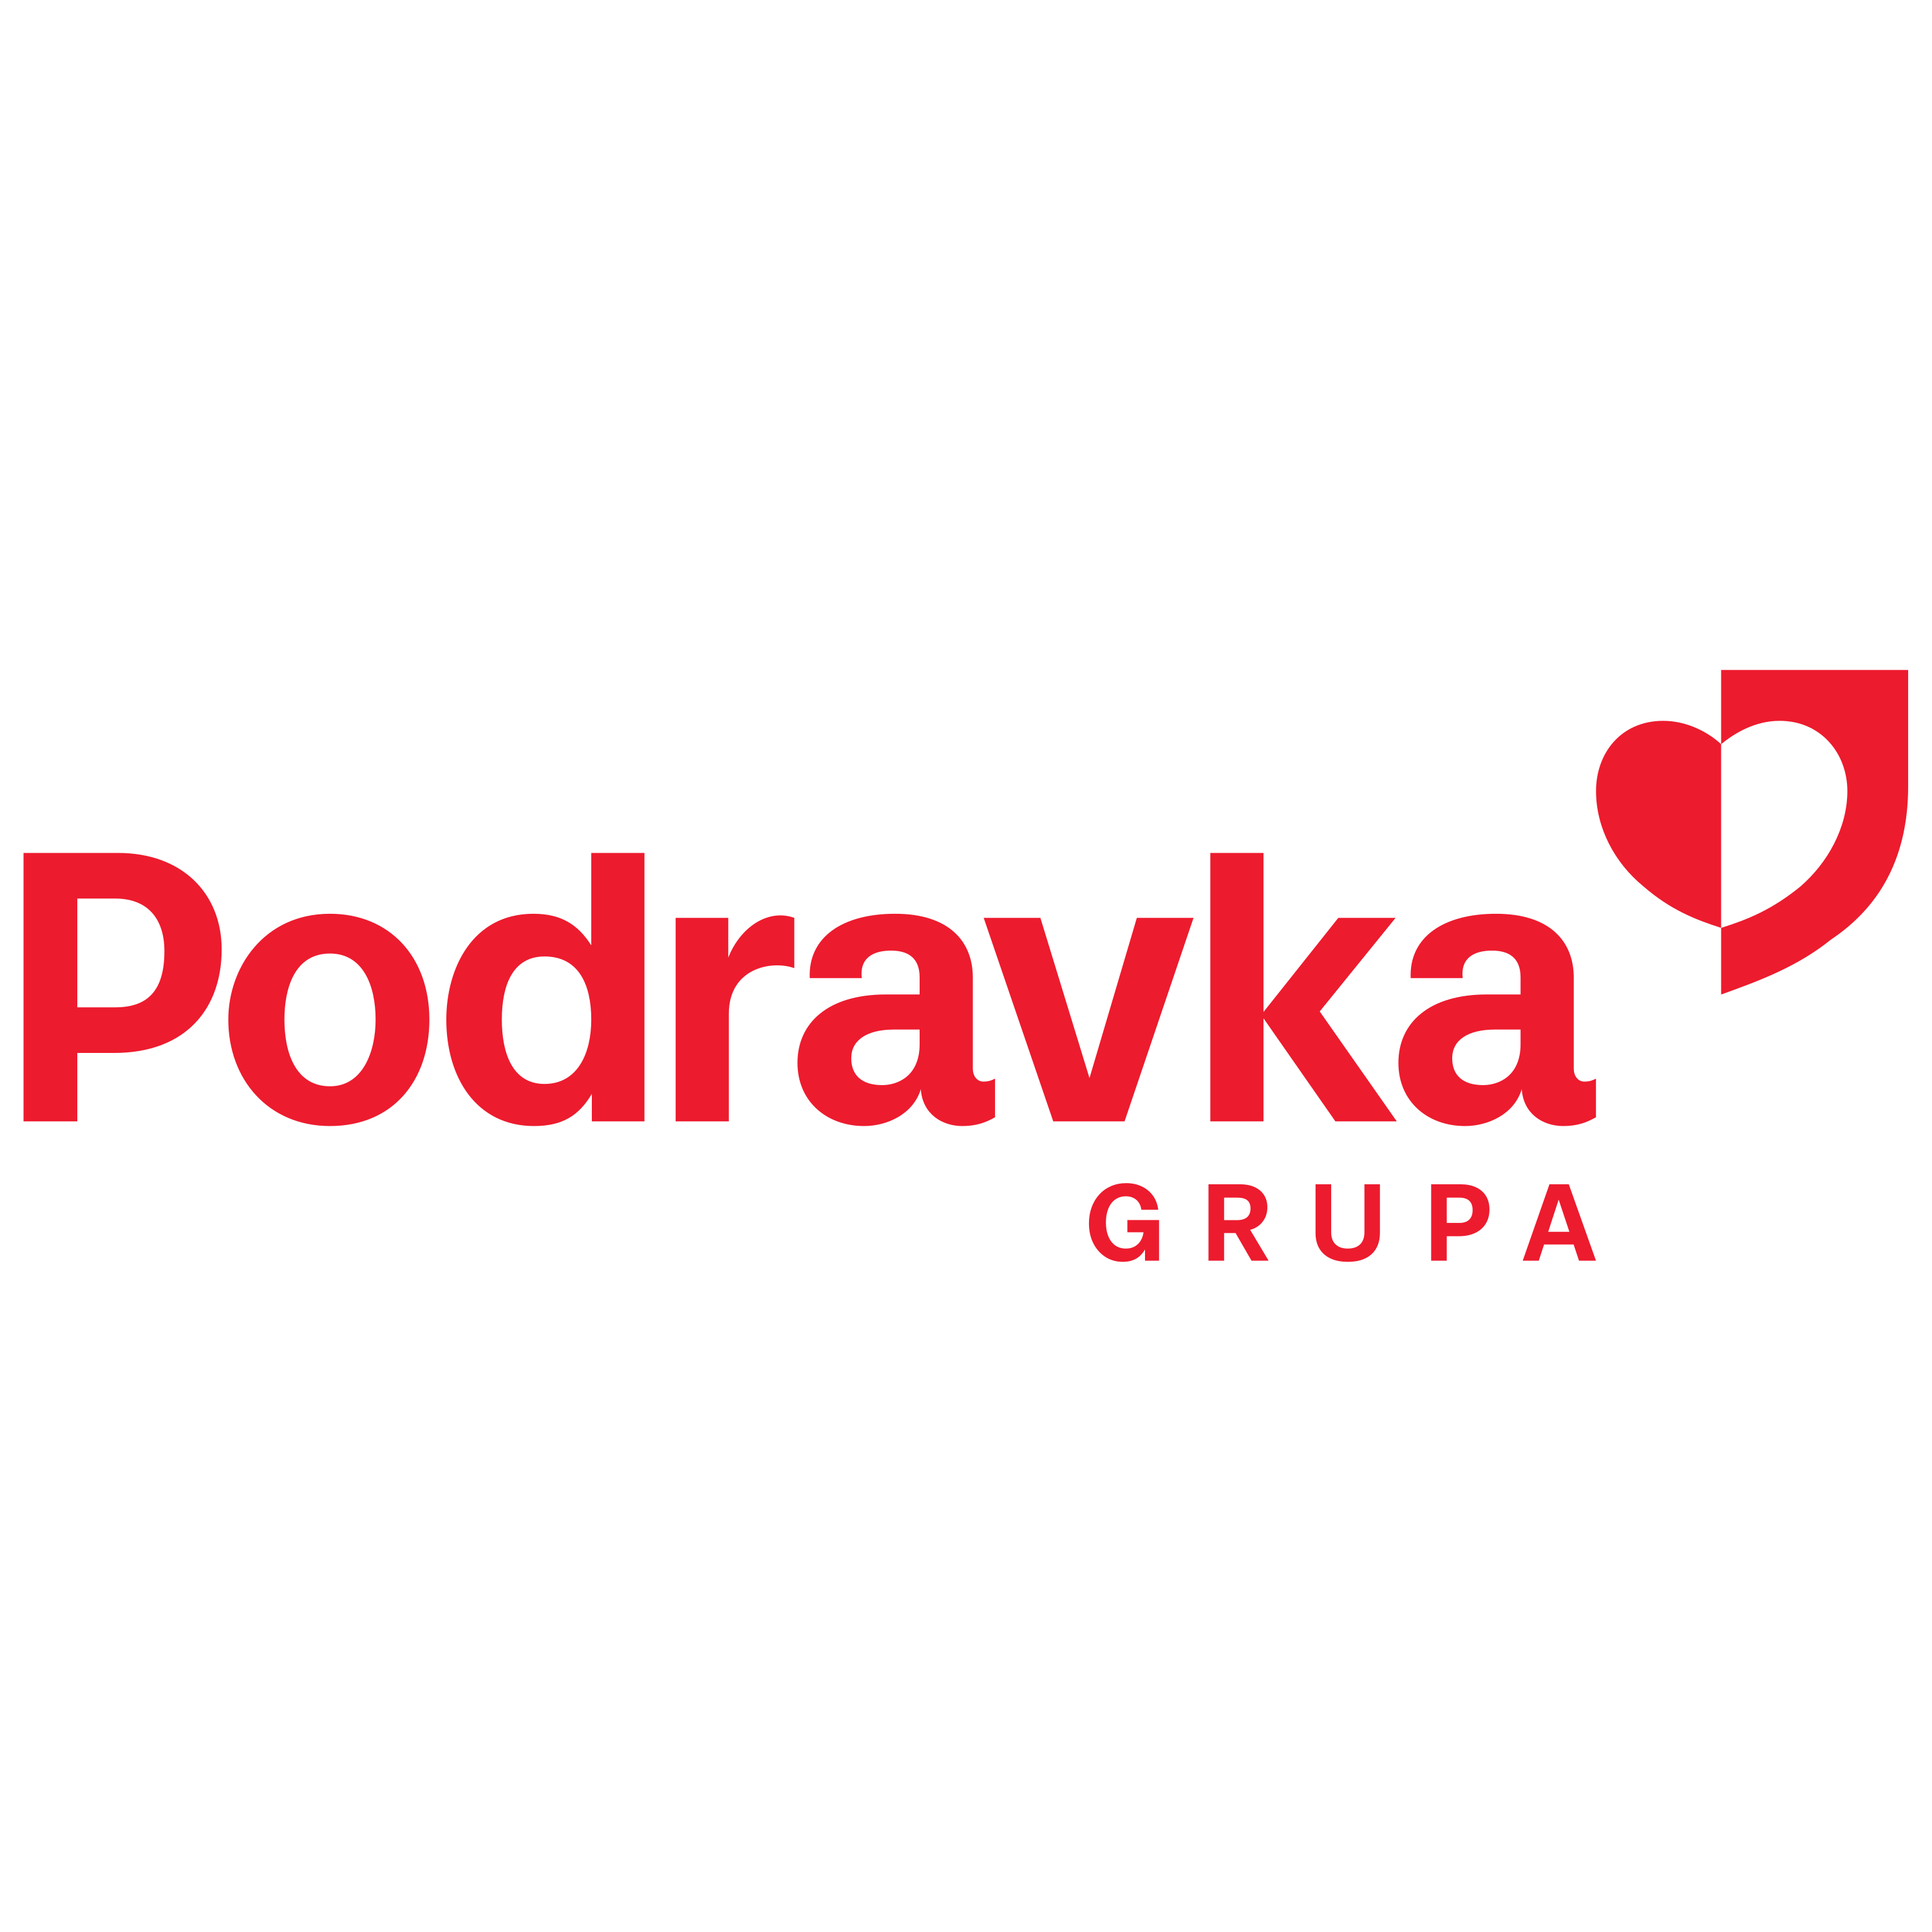 Podravka Logo  Transparent Image